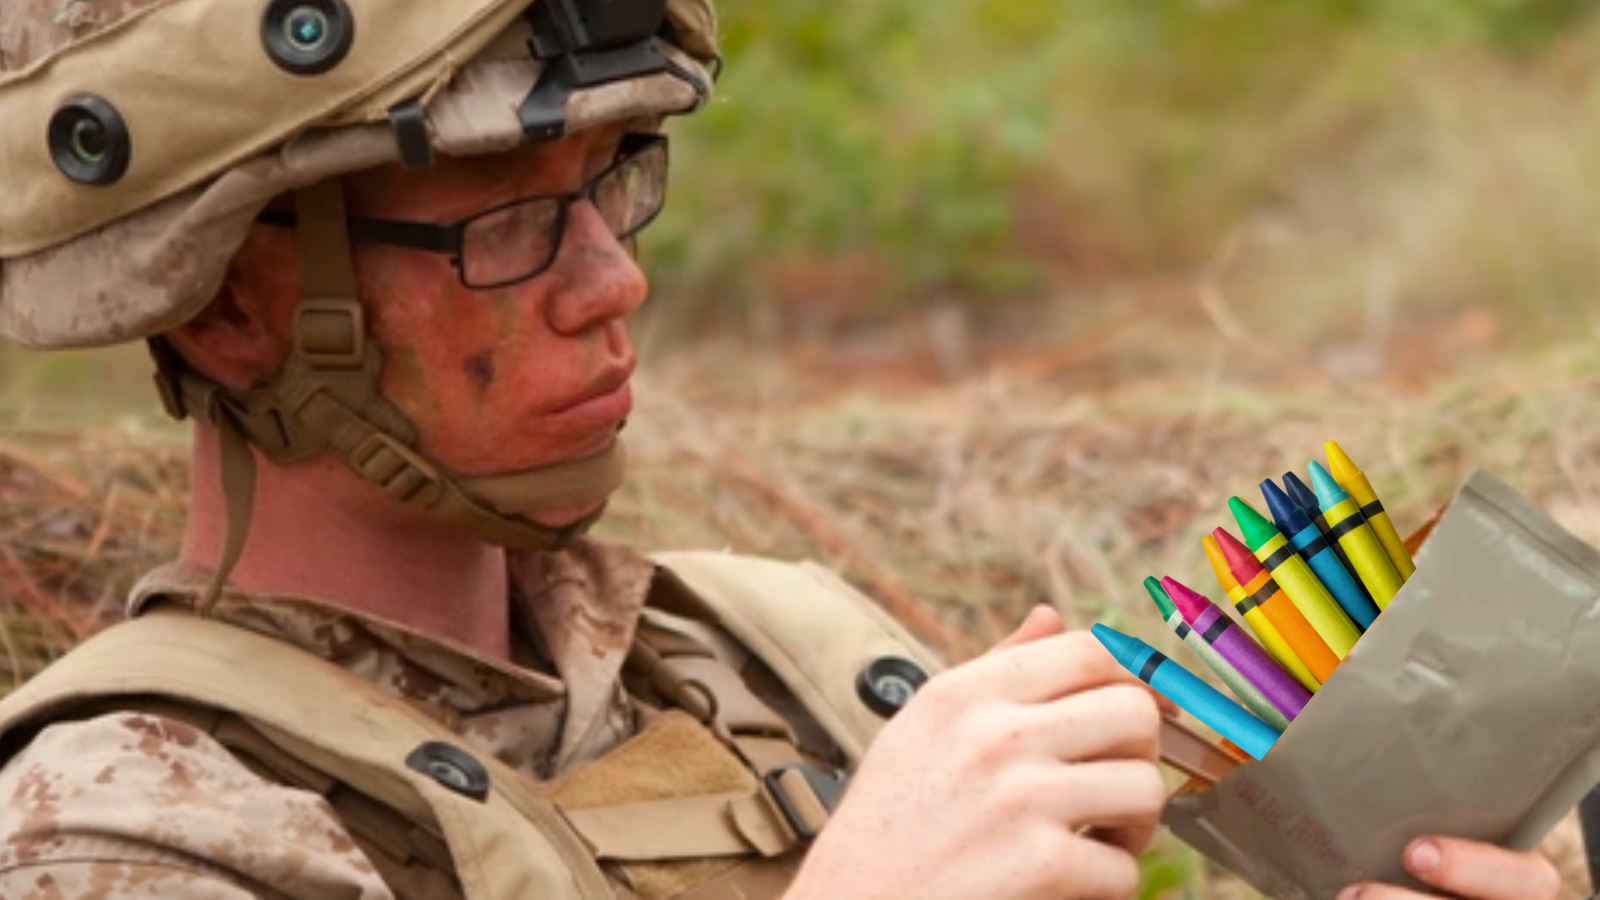 Marine Corps Crayons 